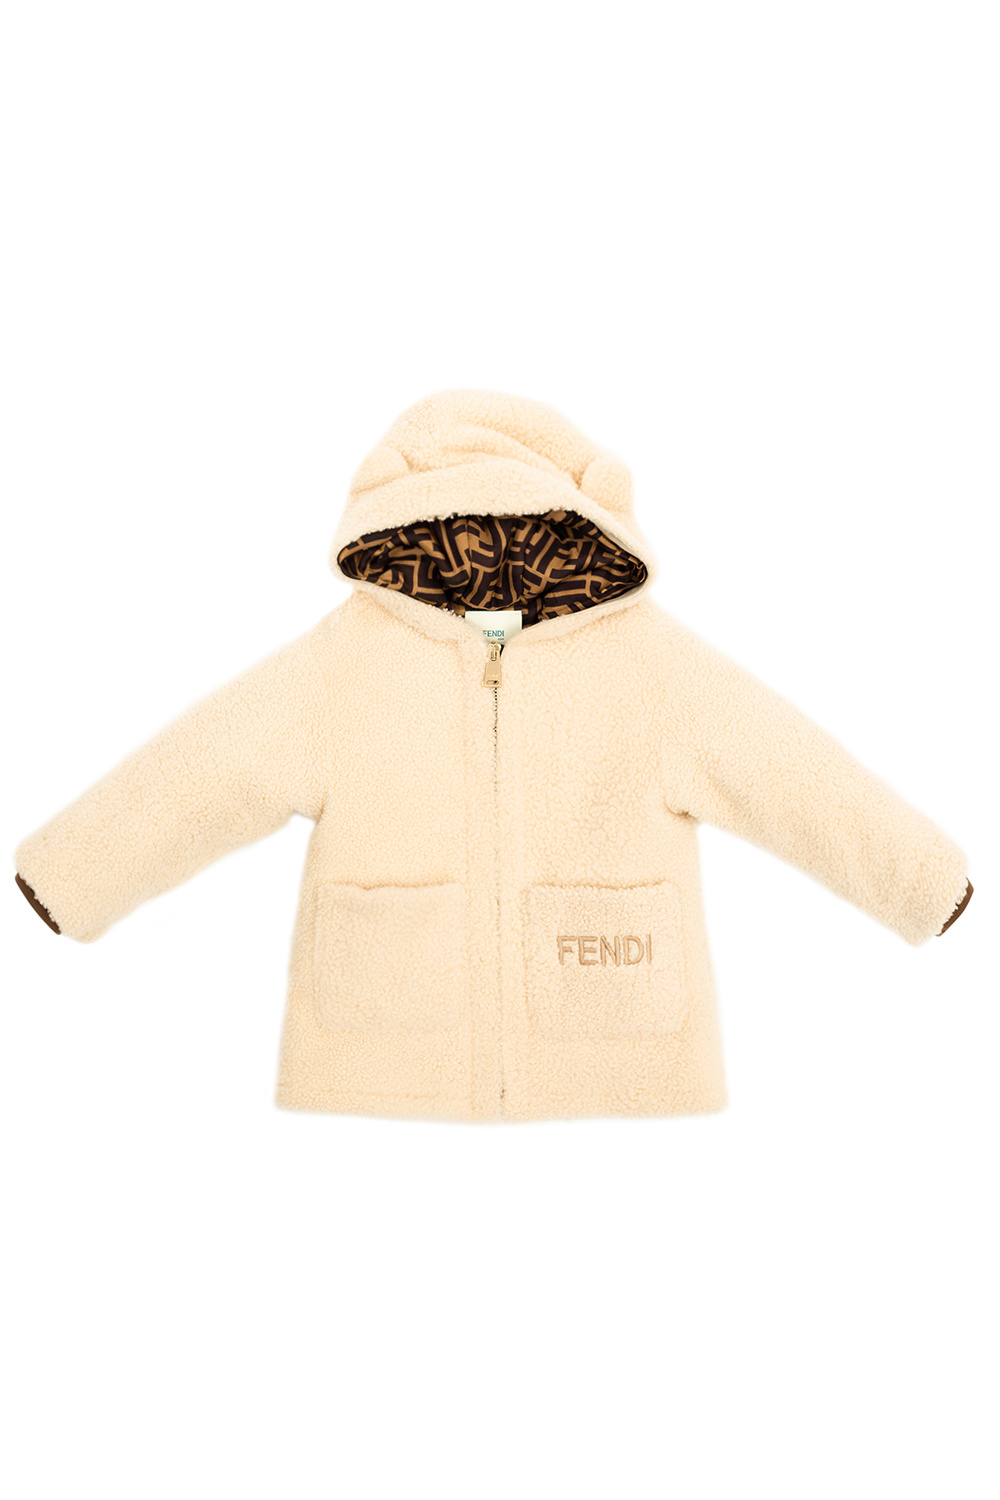 Fendi Kids Fur jacket